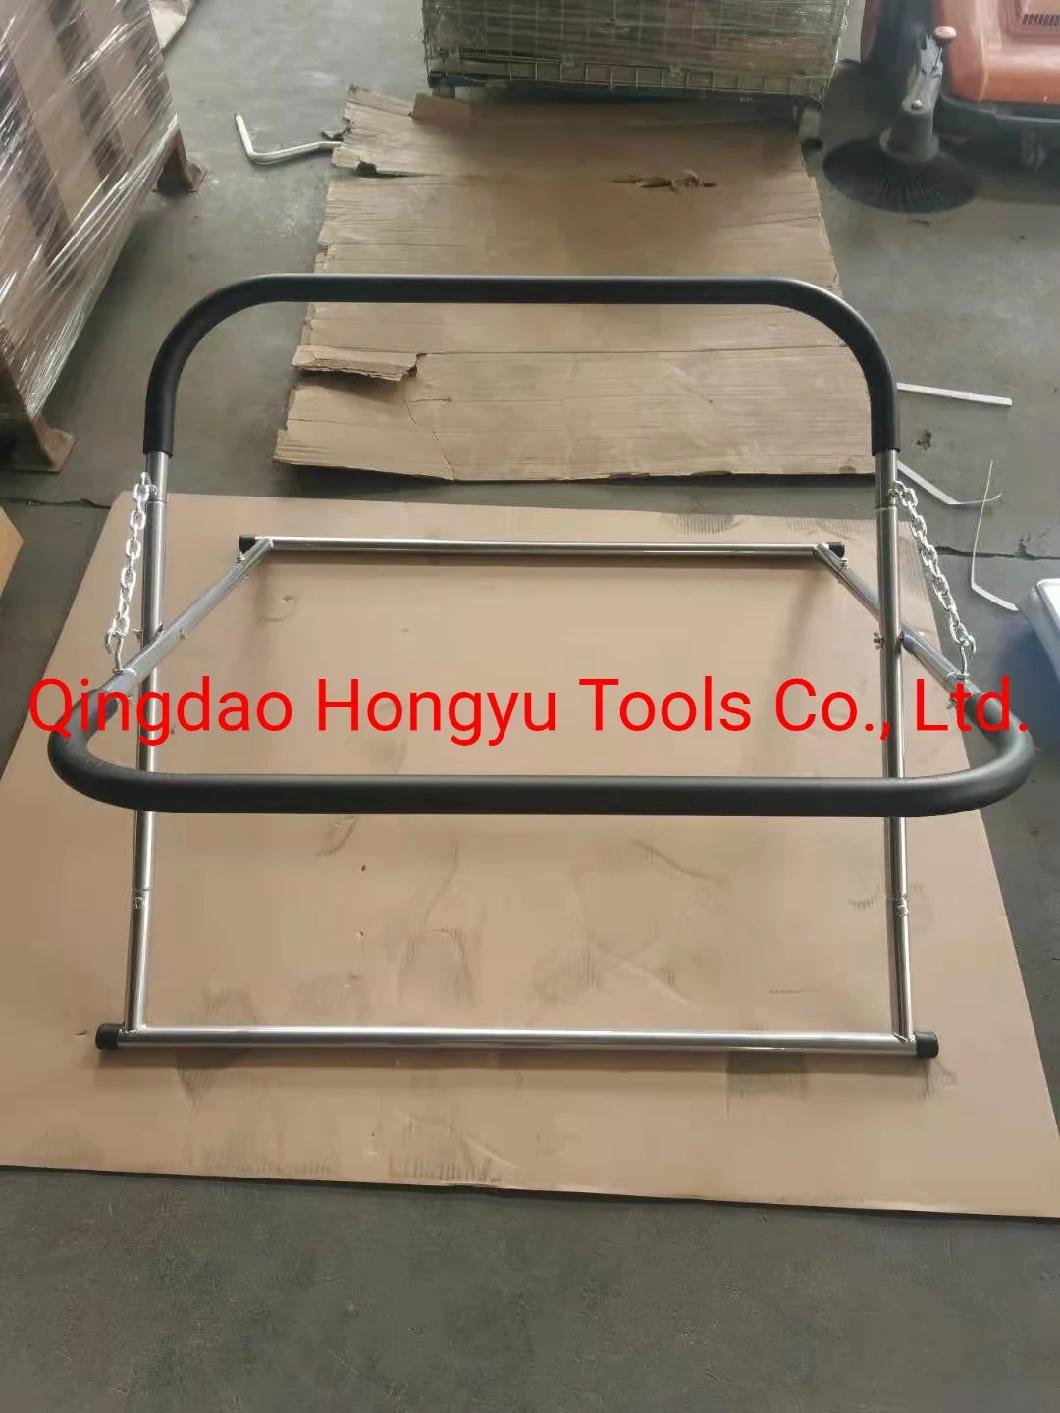 Galvanized Tubular Steel Frame Portable Work Stand Bodyshop Panel Stand, Trestle, Bumper